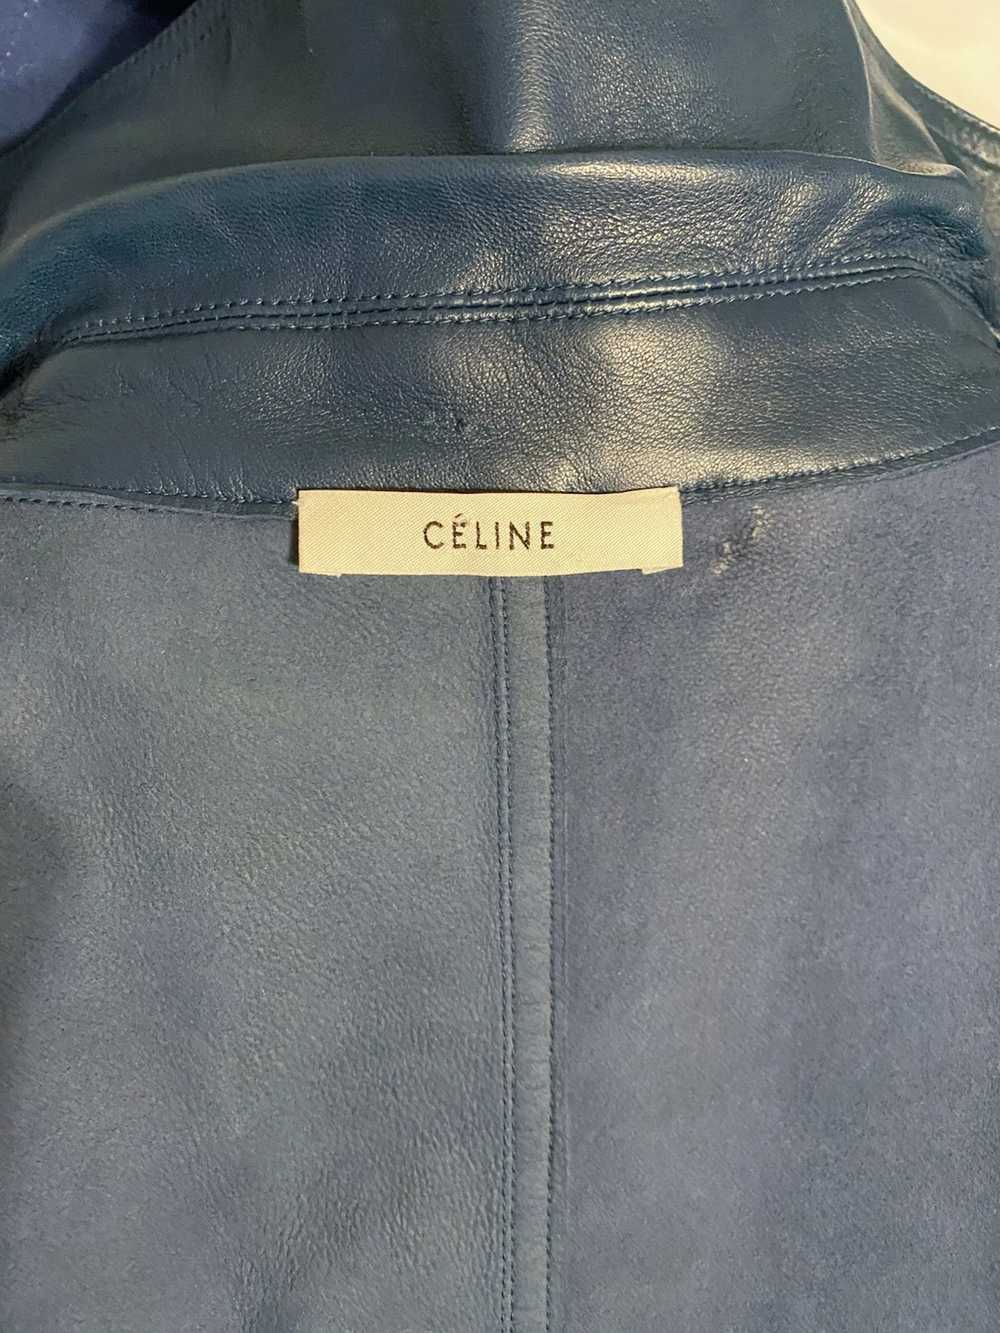 Celine Rare Navy Lamb Leather Céline Trench Coat - image 6